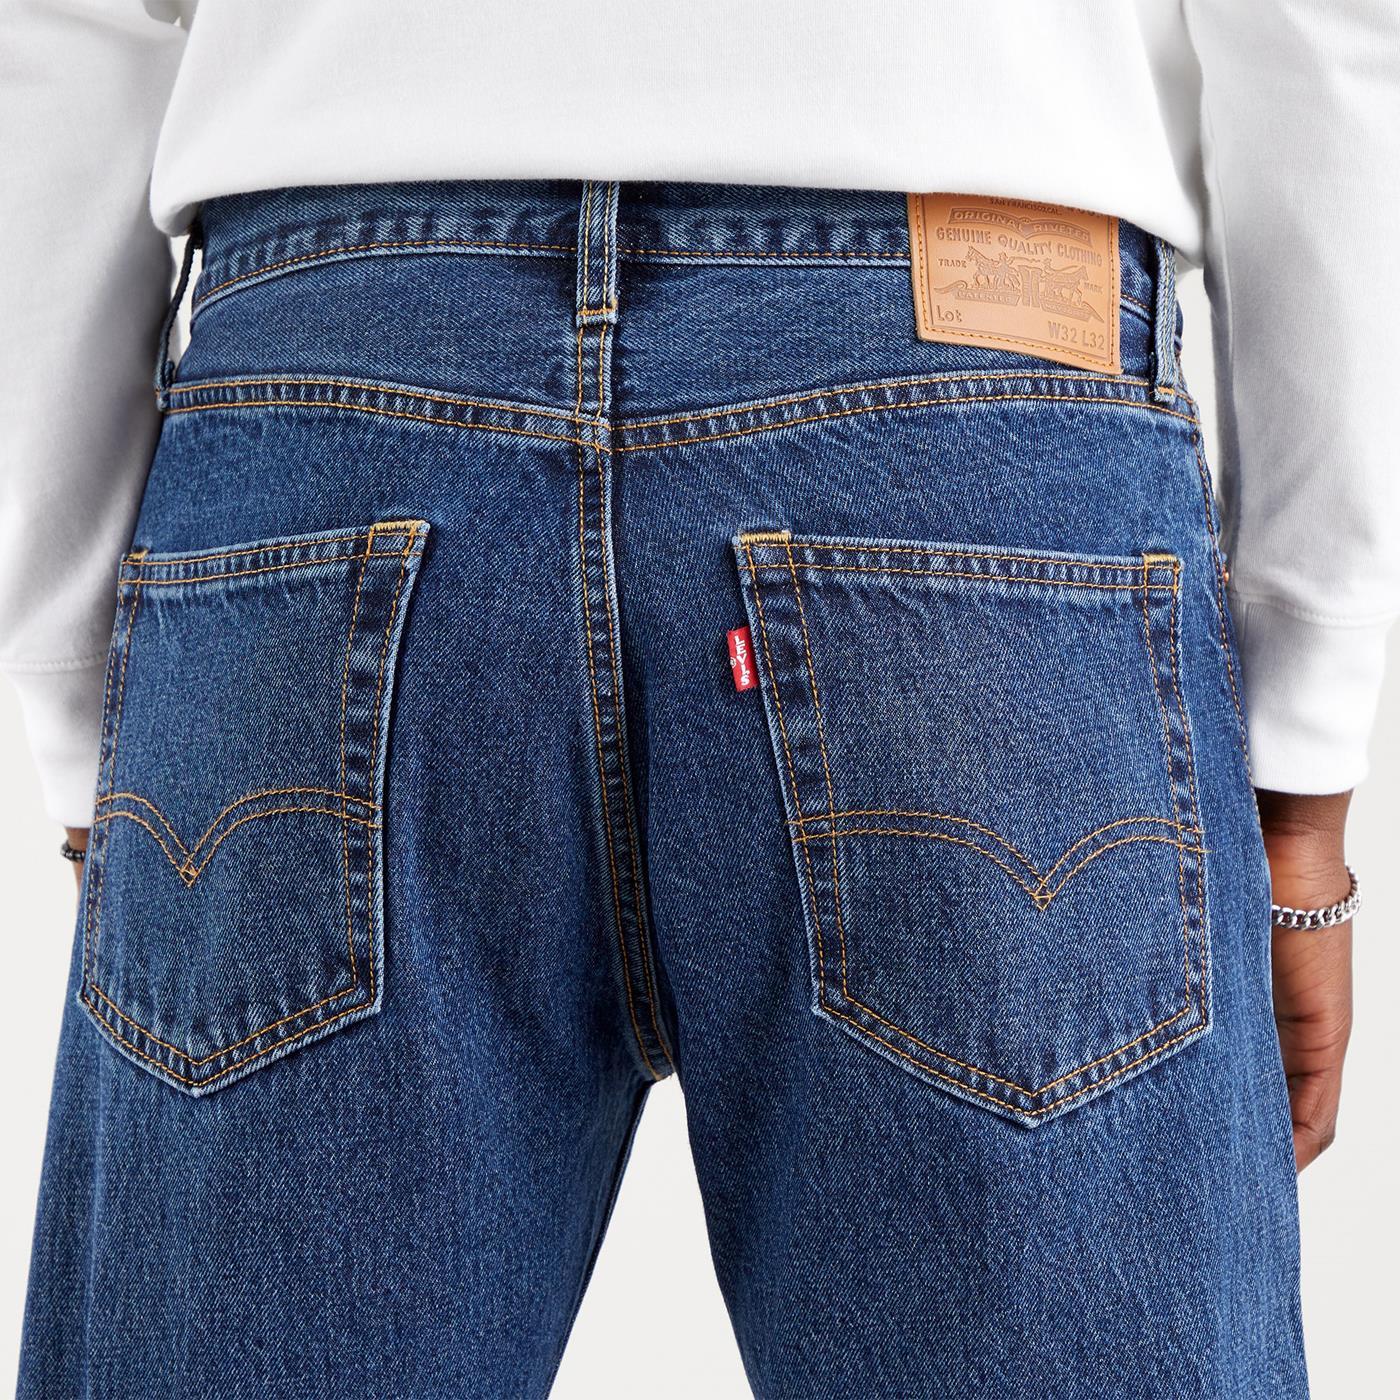 Topo 115+ imagem calça jeans 551z authentic straight - br.thptnganamst ...